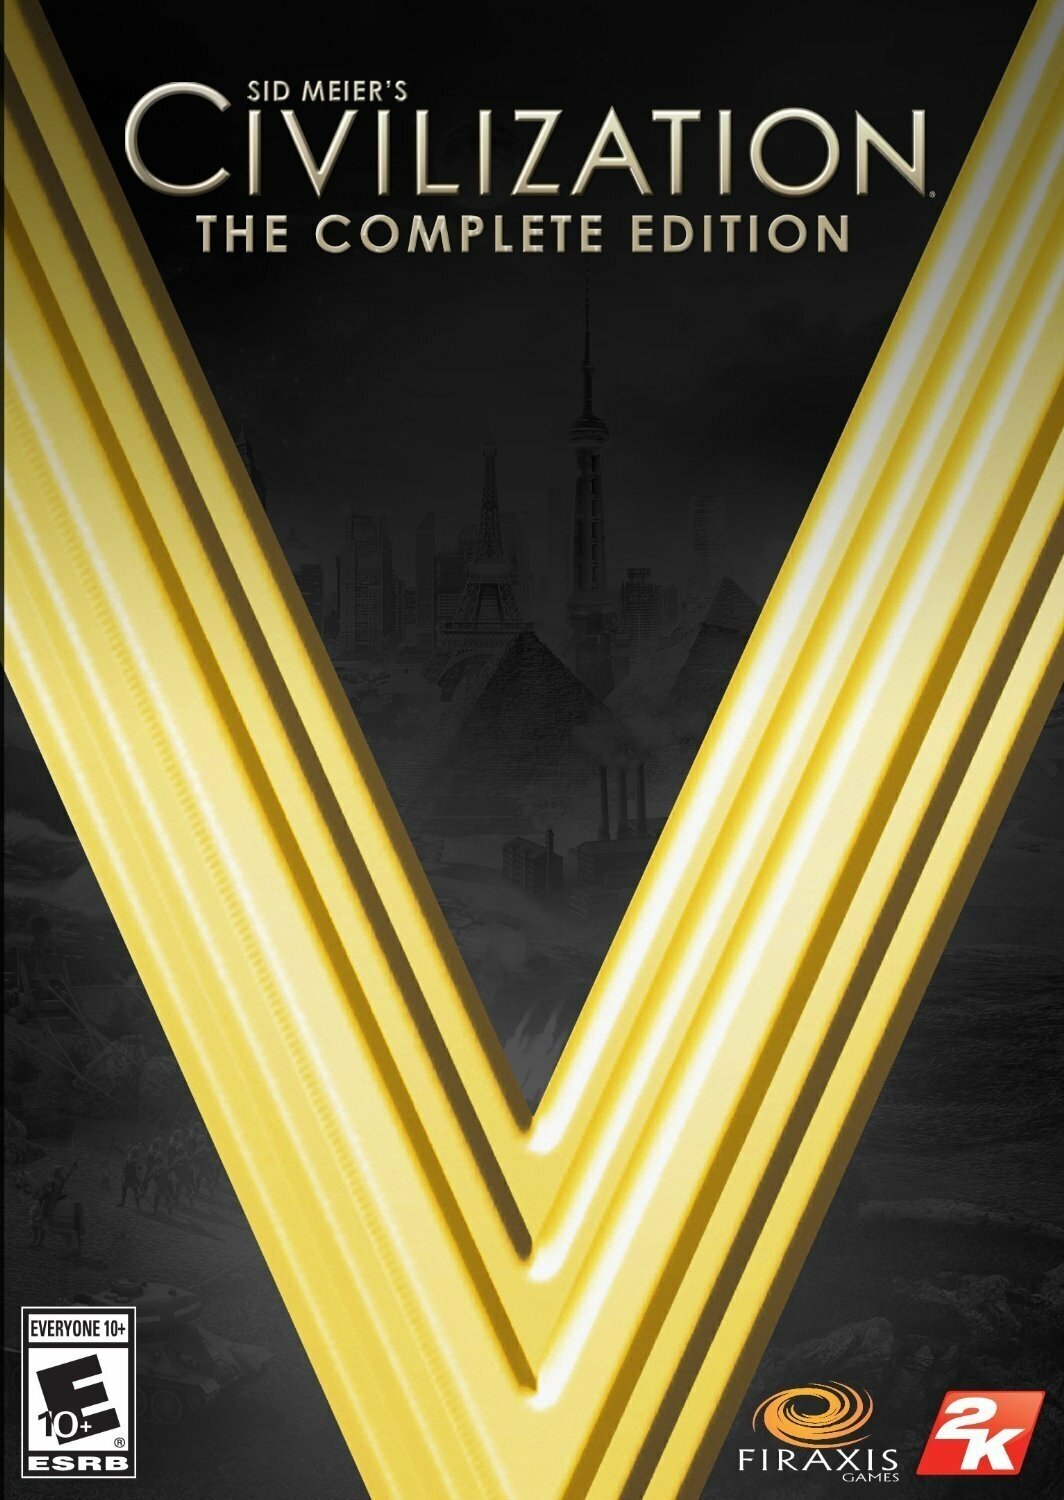 Игра Sid Meier's Civilization V Complete Edition для ПК, активация Steam, английская версия, электронный ключ